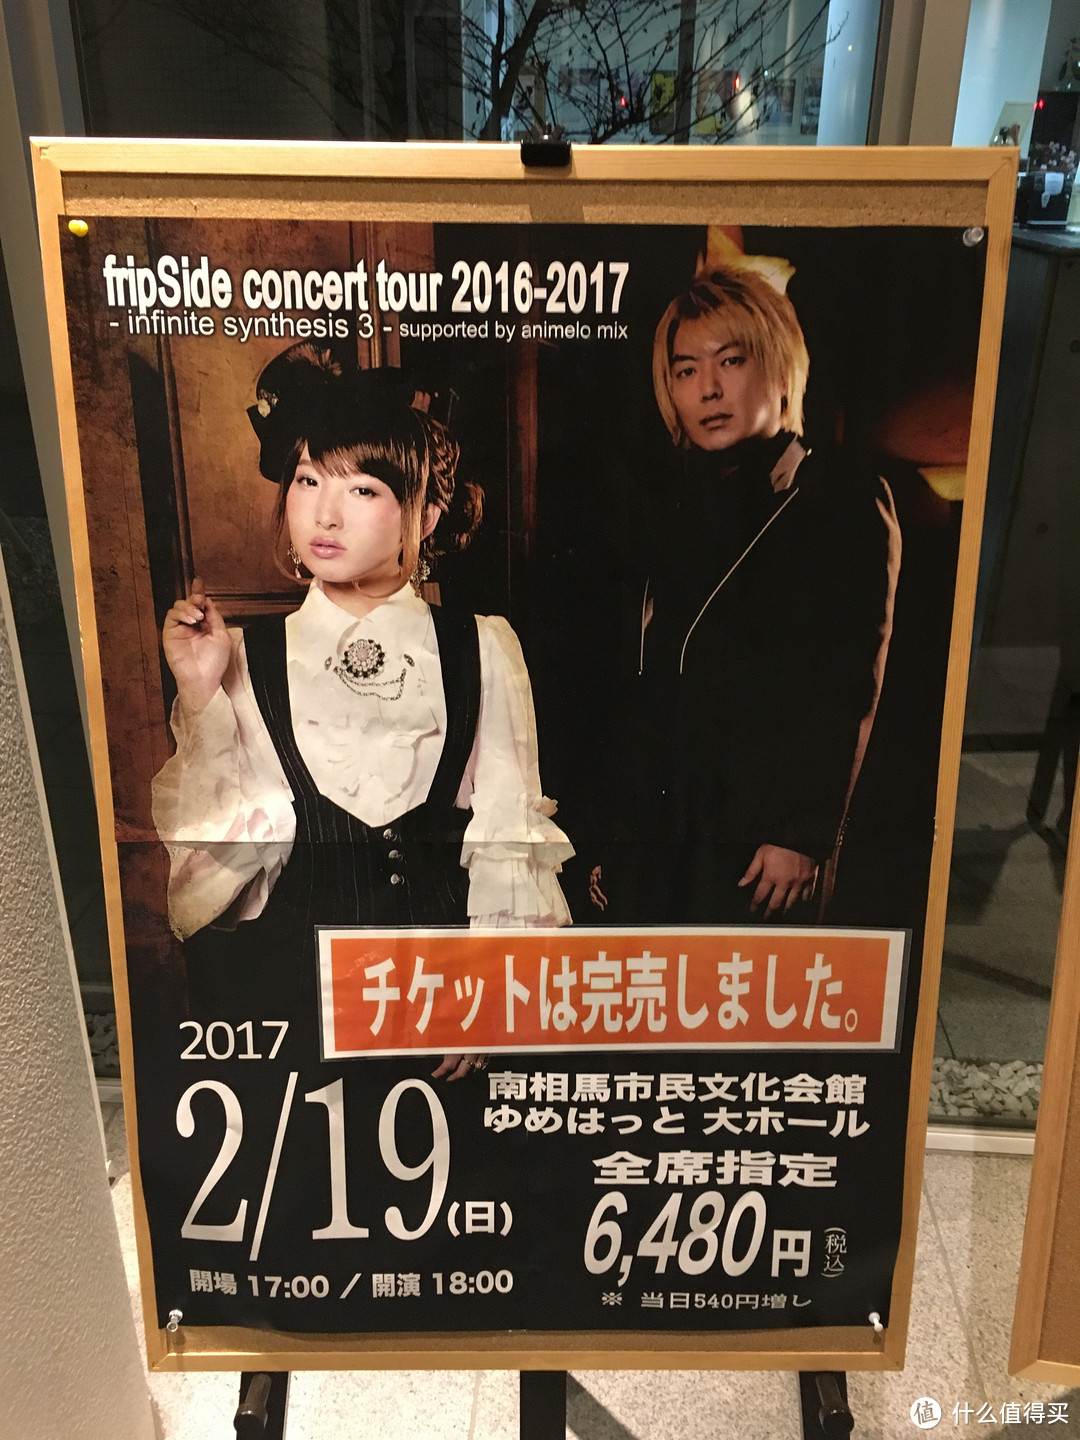 福岛南相马市自由行——远征 fripSide concert tour 2016-2017